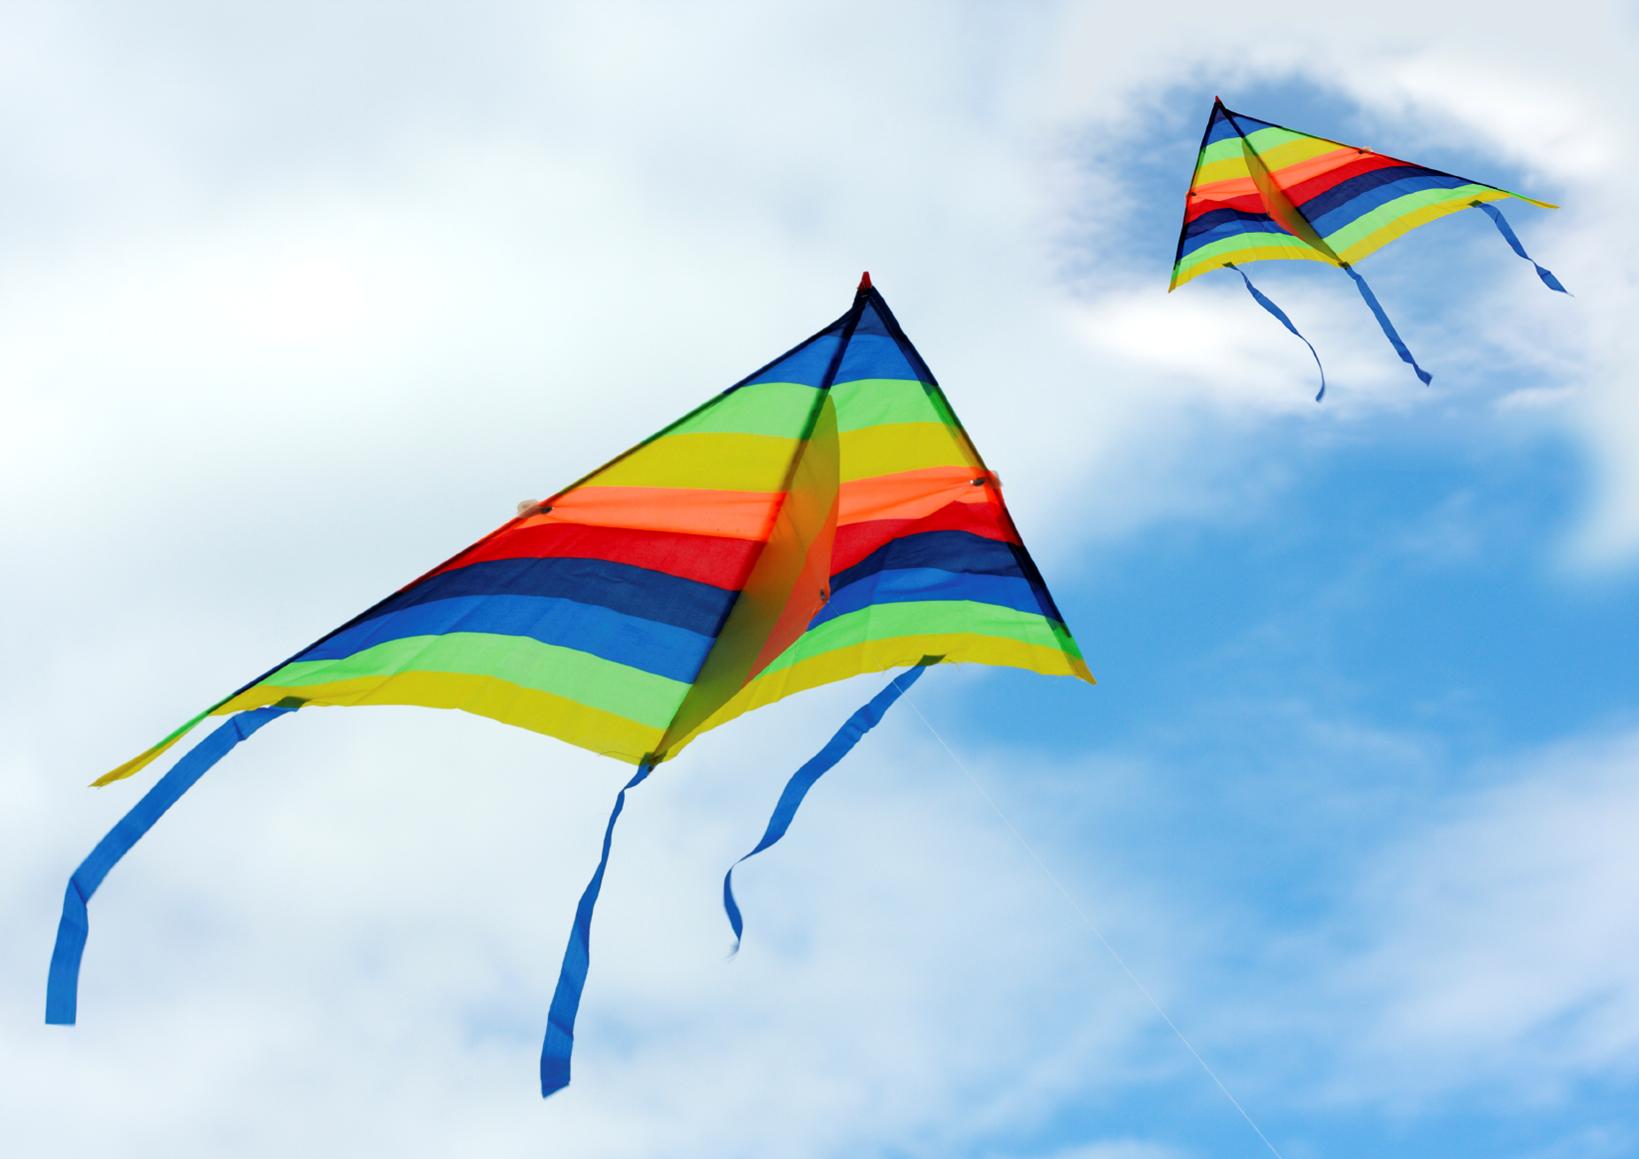 kite surfing pics: Kite